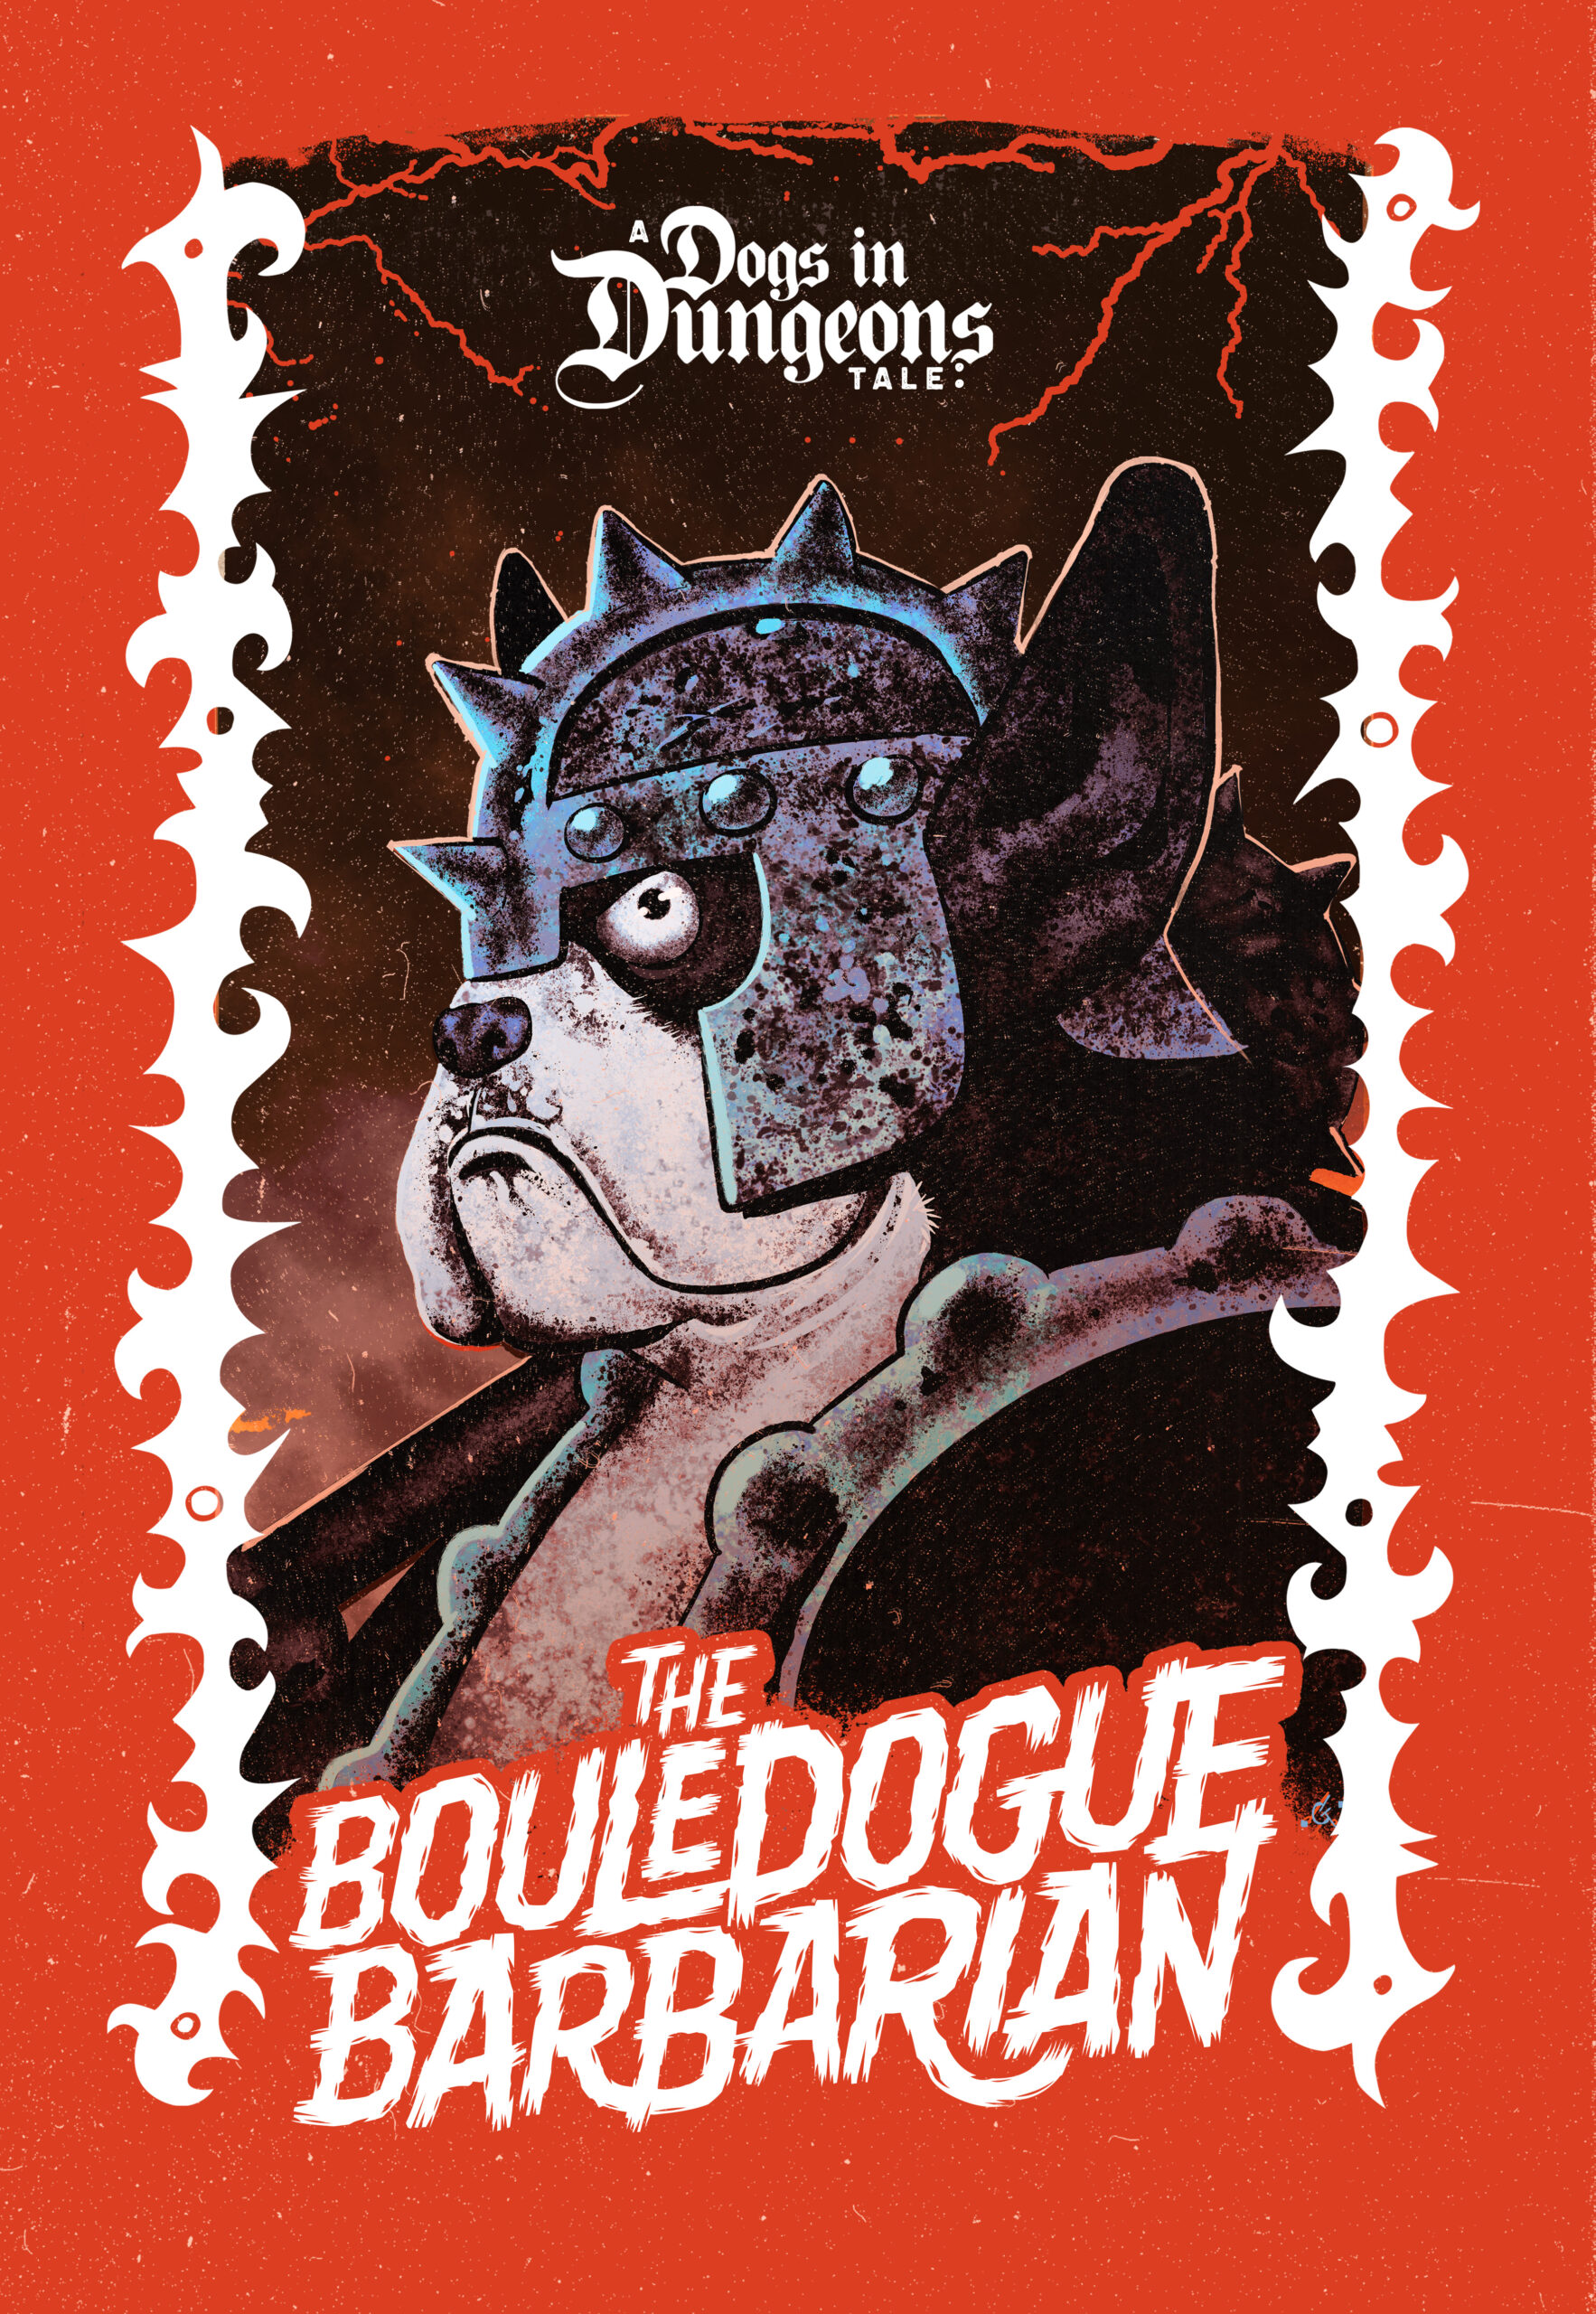 The Bouledogue Barbarian